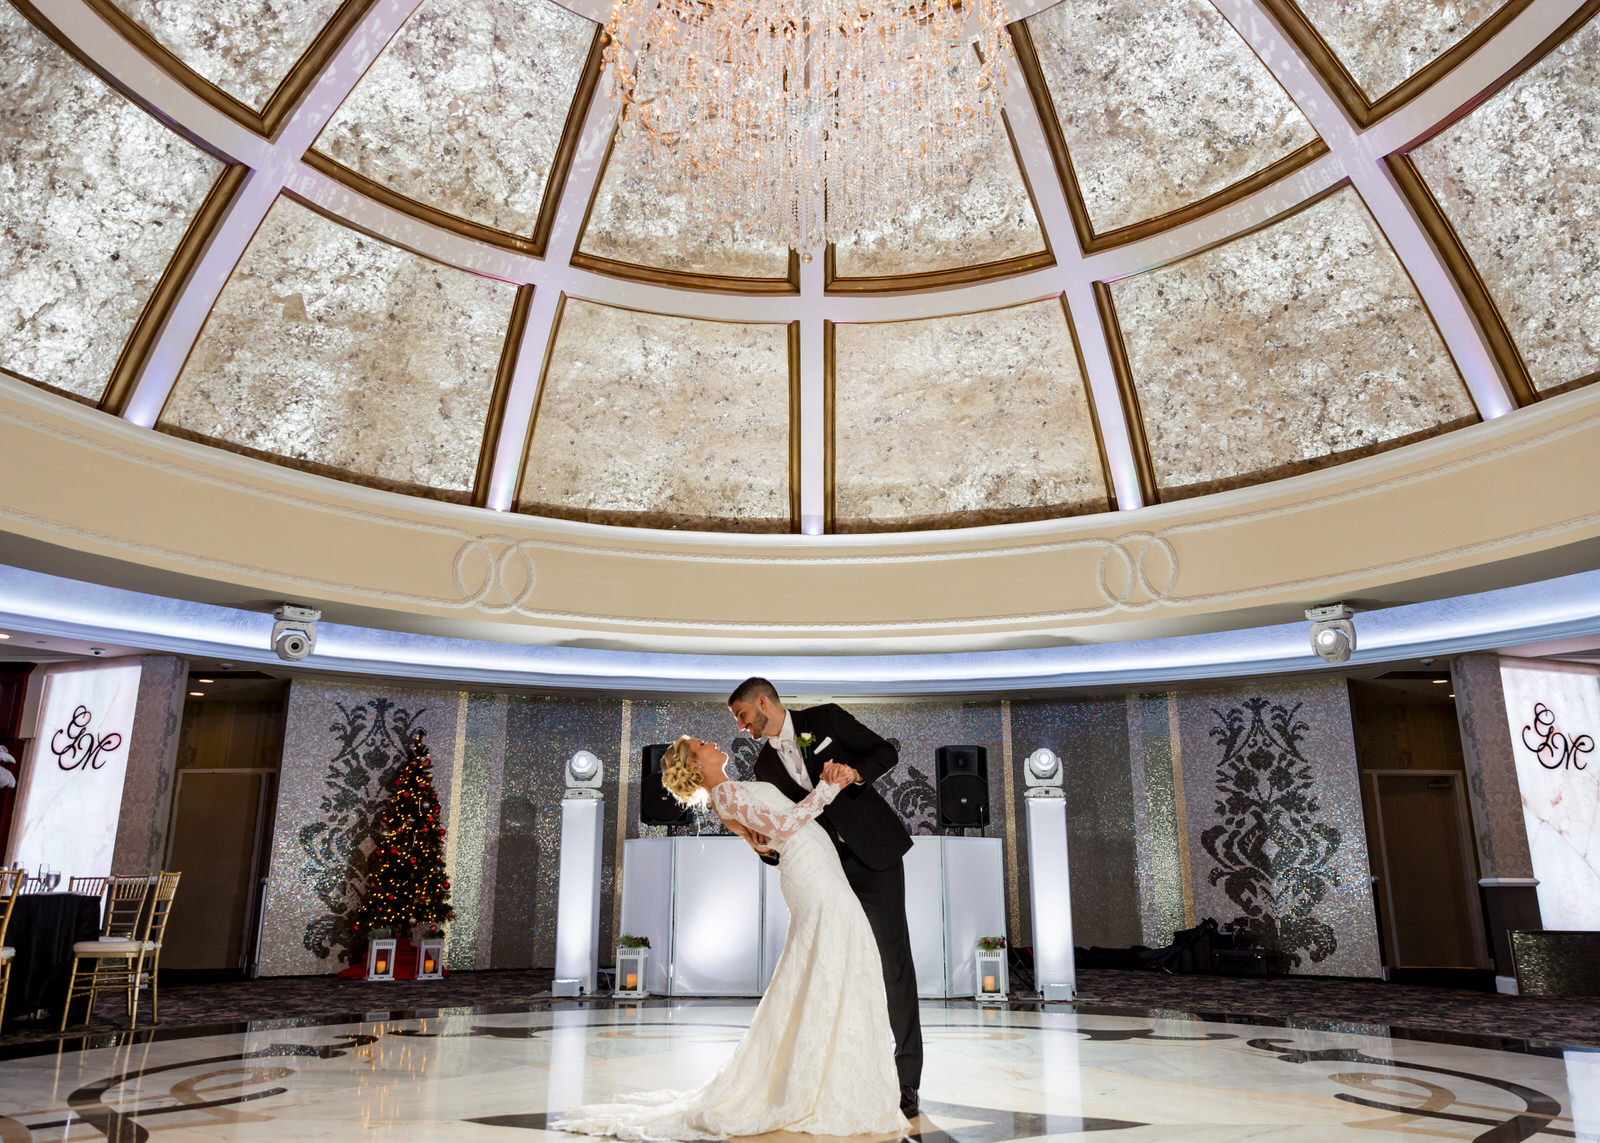 Wedding and Banquet Halls in NJ | Rental Halls